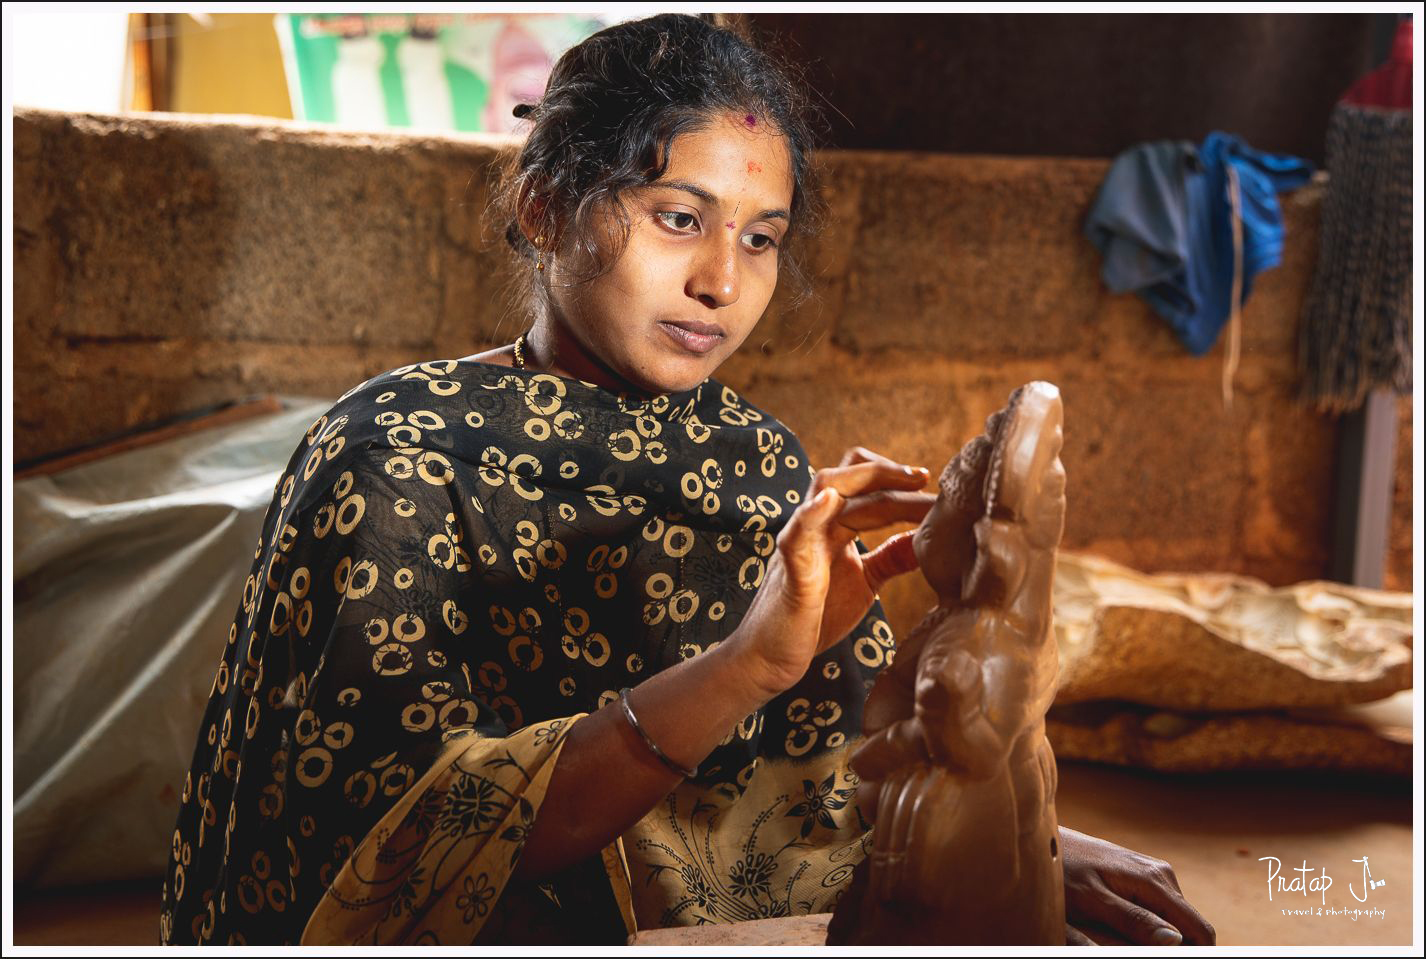 Portrait of a woman shaping a Ganesha idol by hand